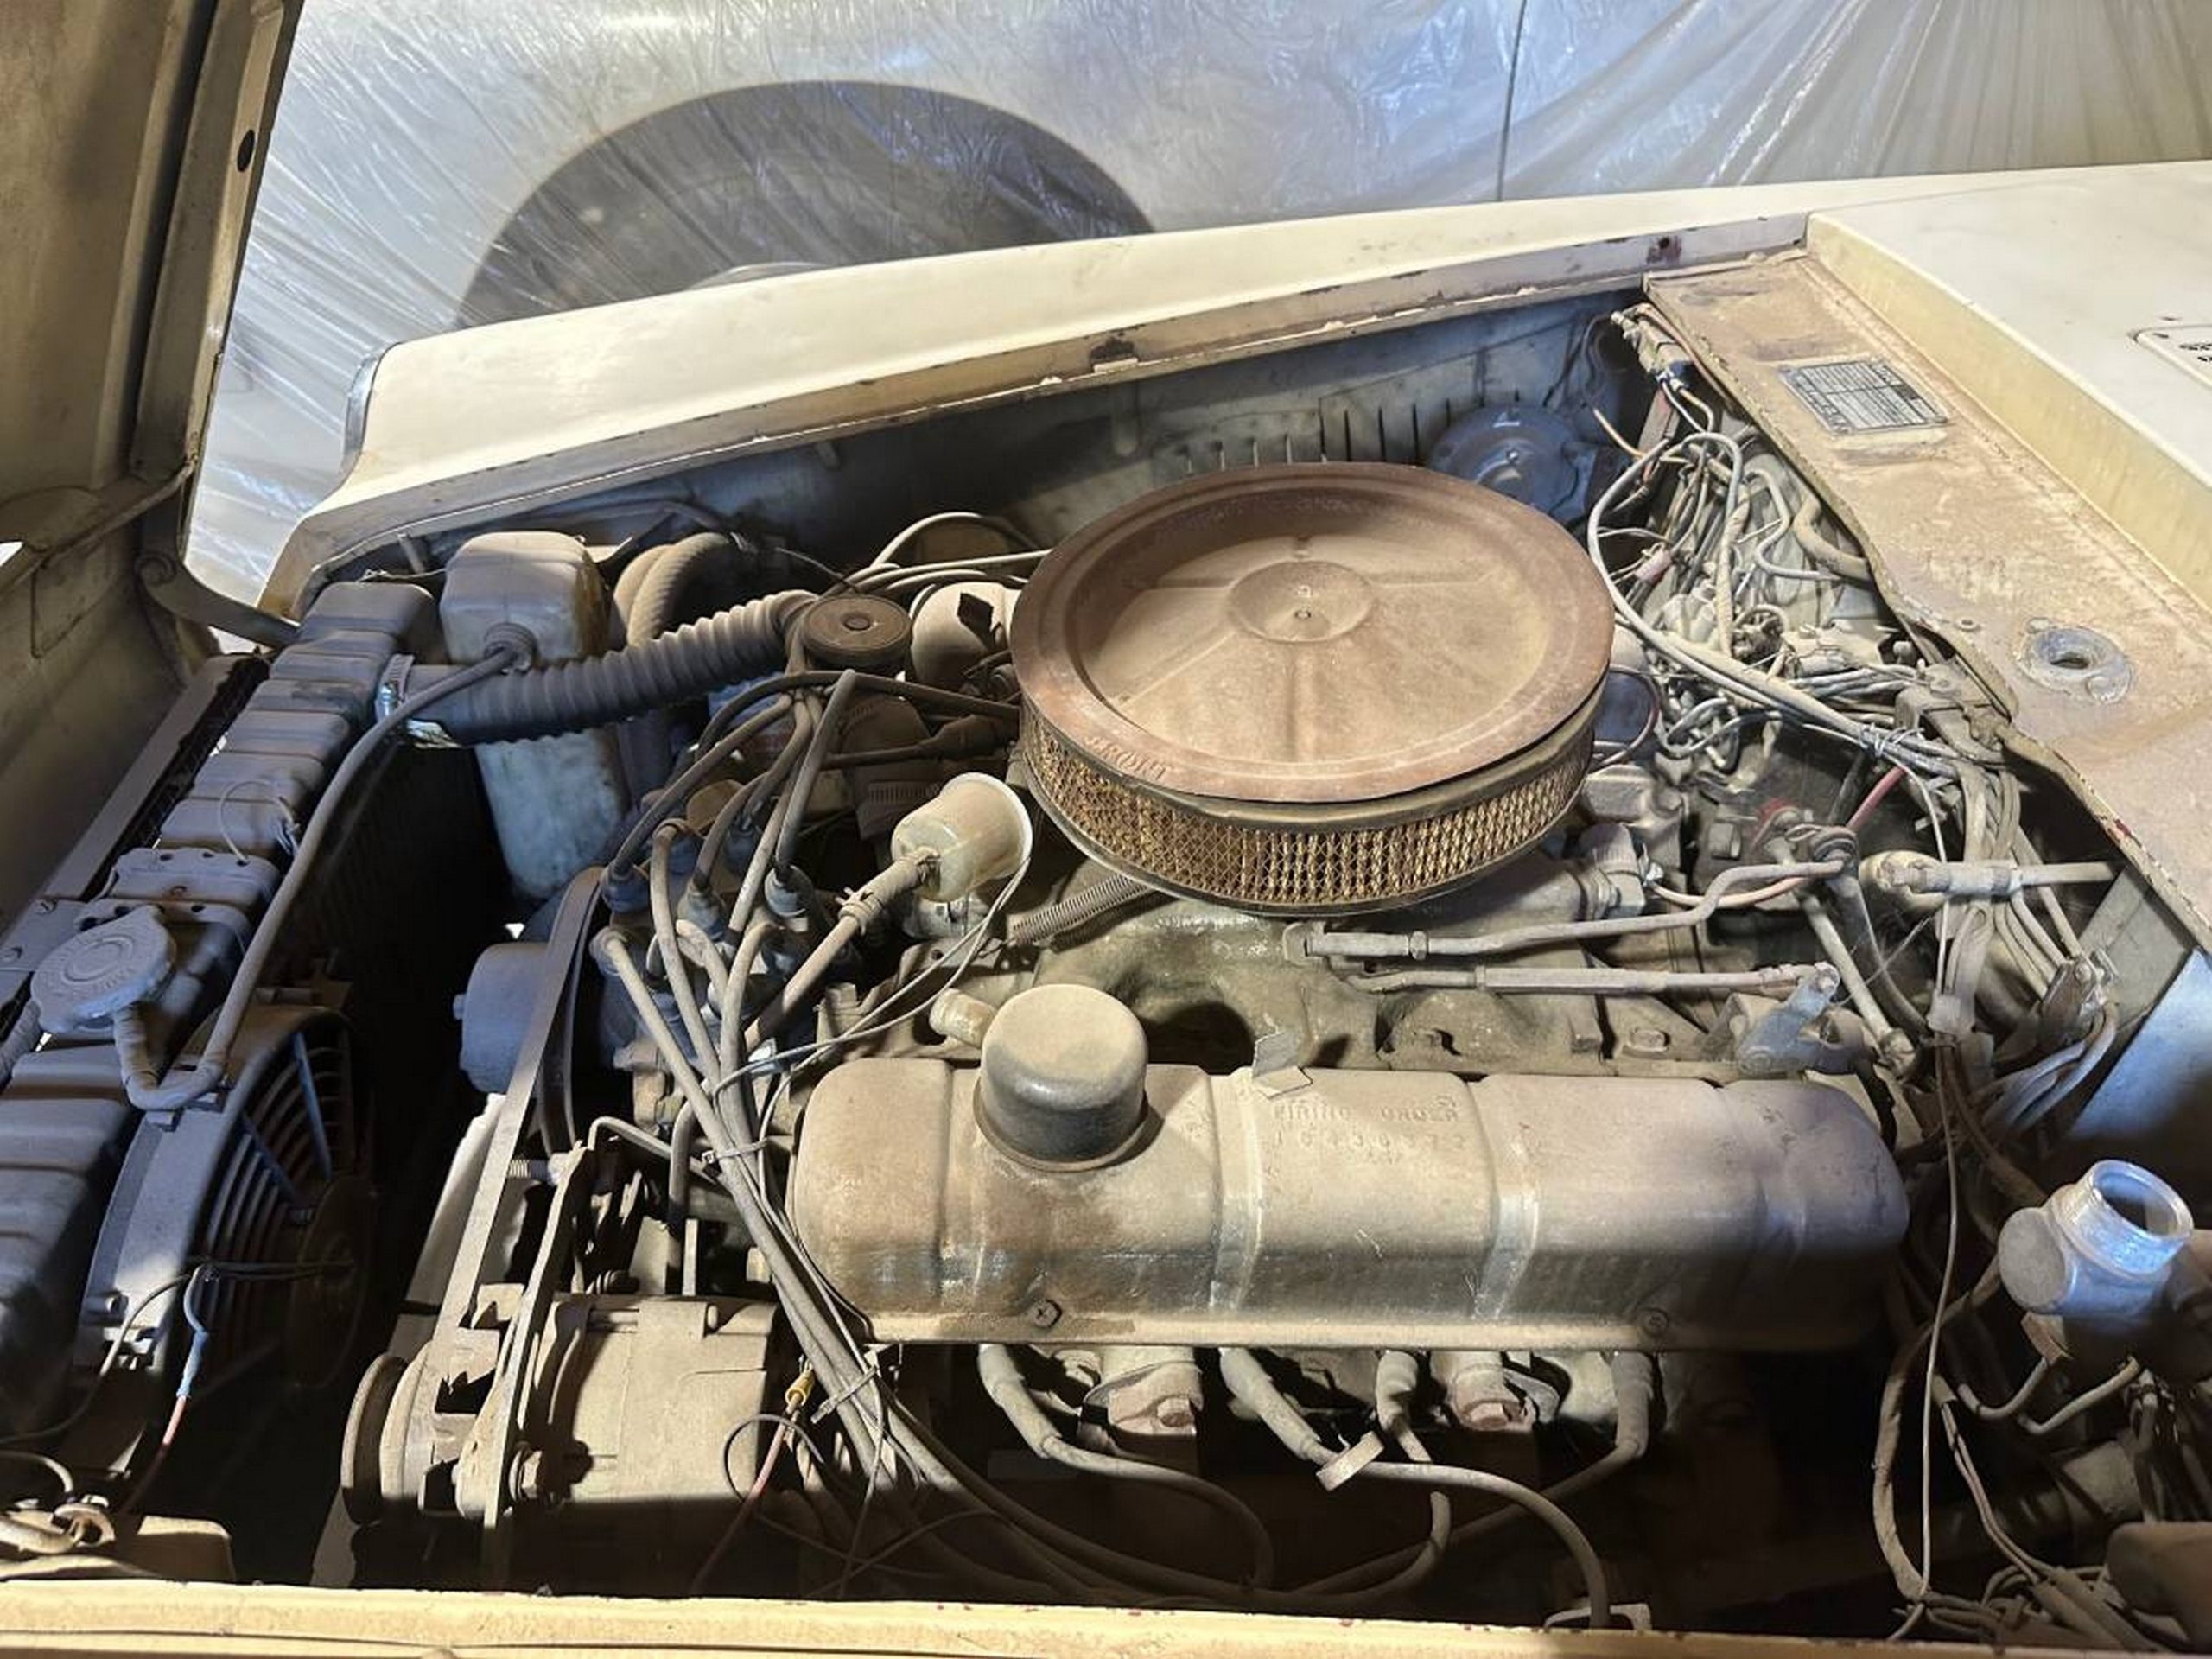 Datsun Fairlady 1600 Engine Swap Classic Charm, Modern Power